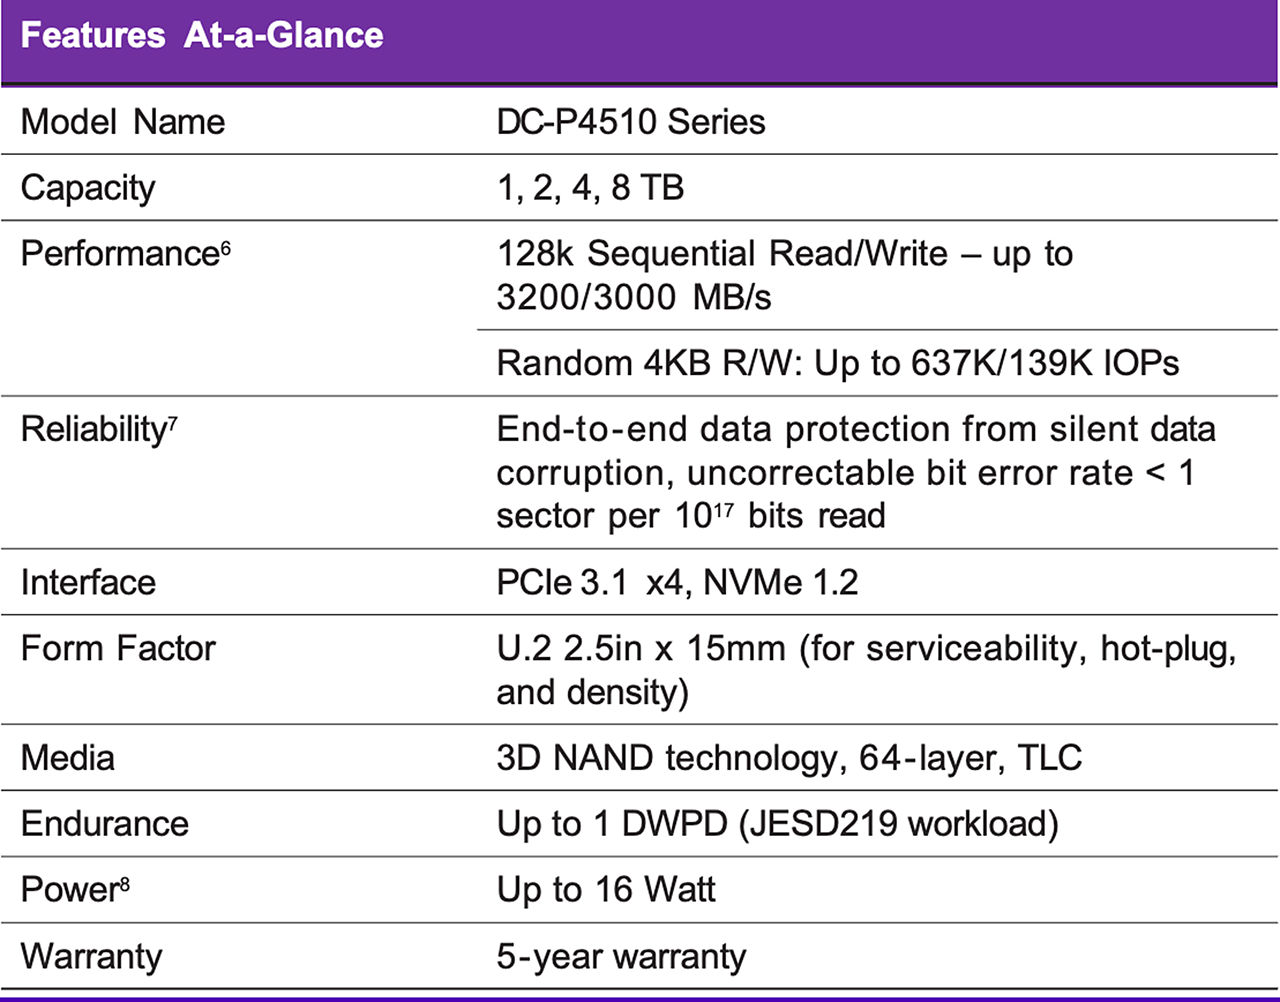 Solidigm DC-P4510 Features and Capabilities